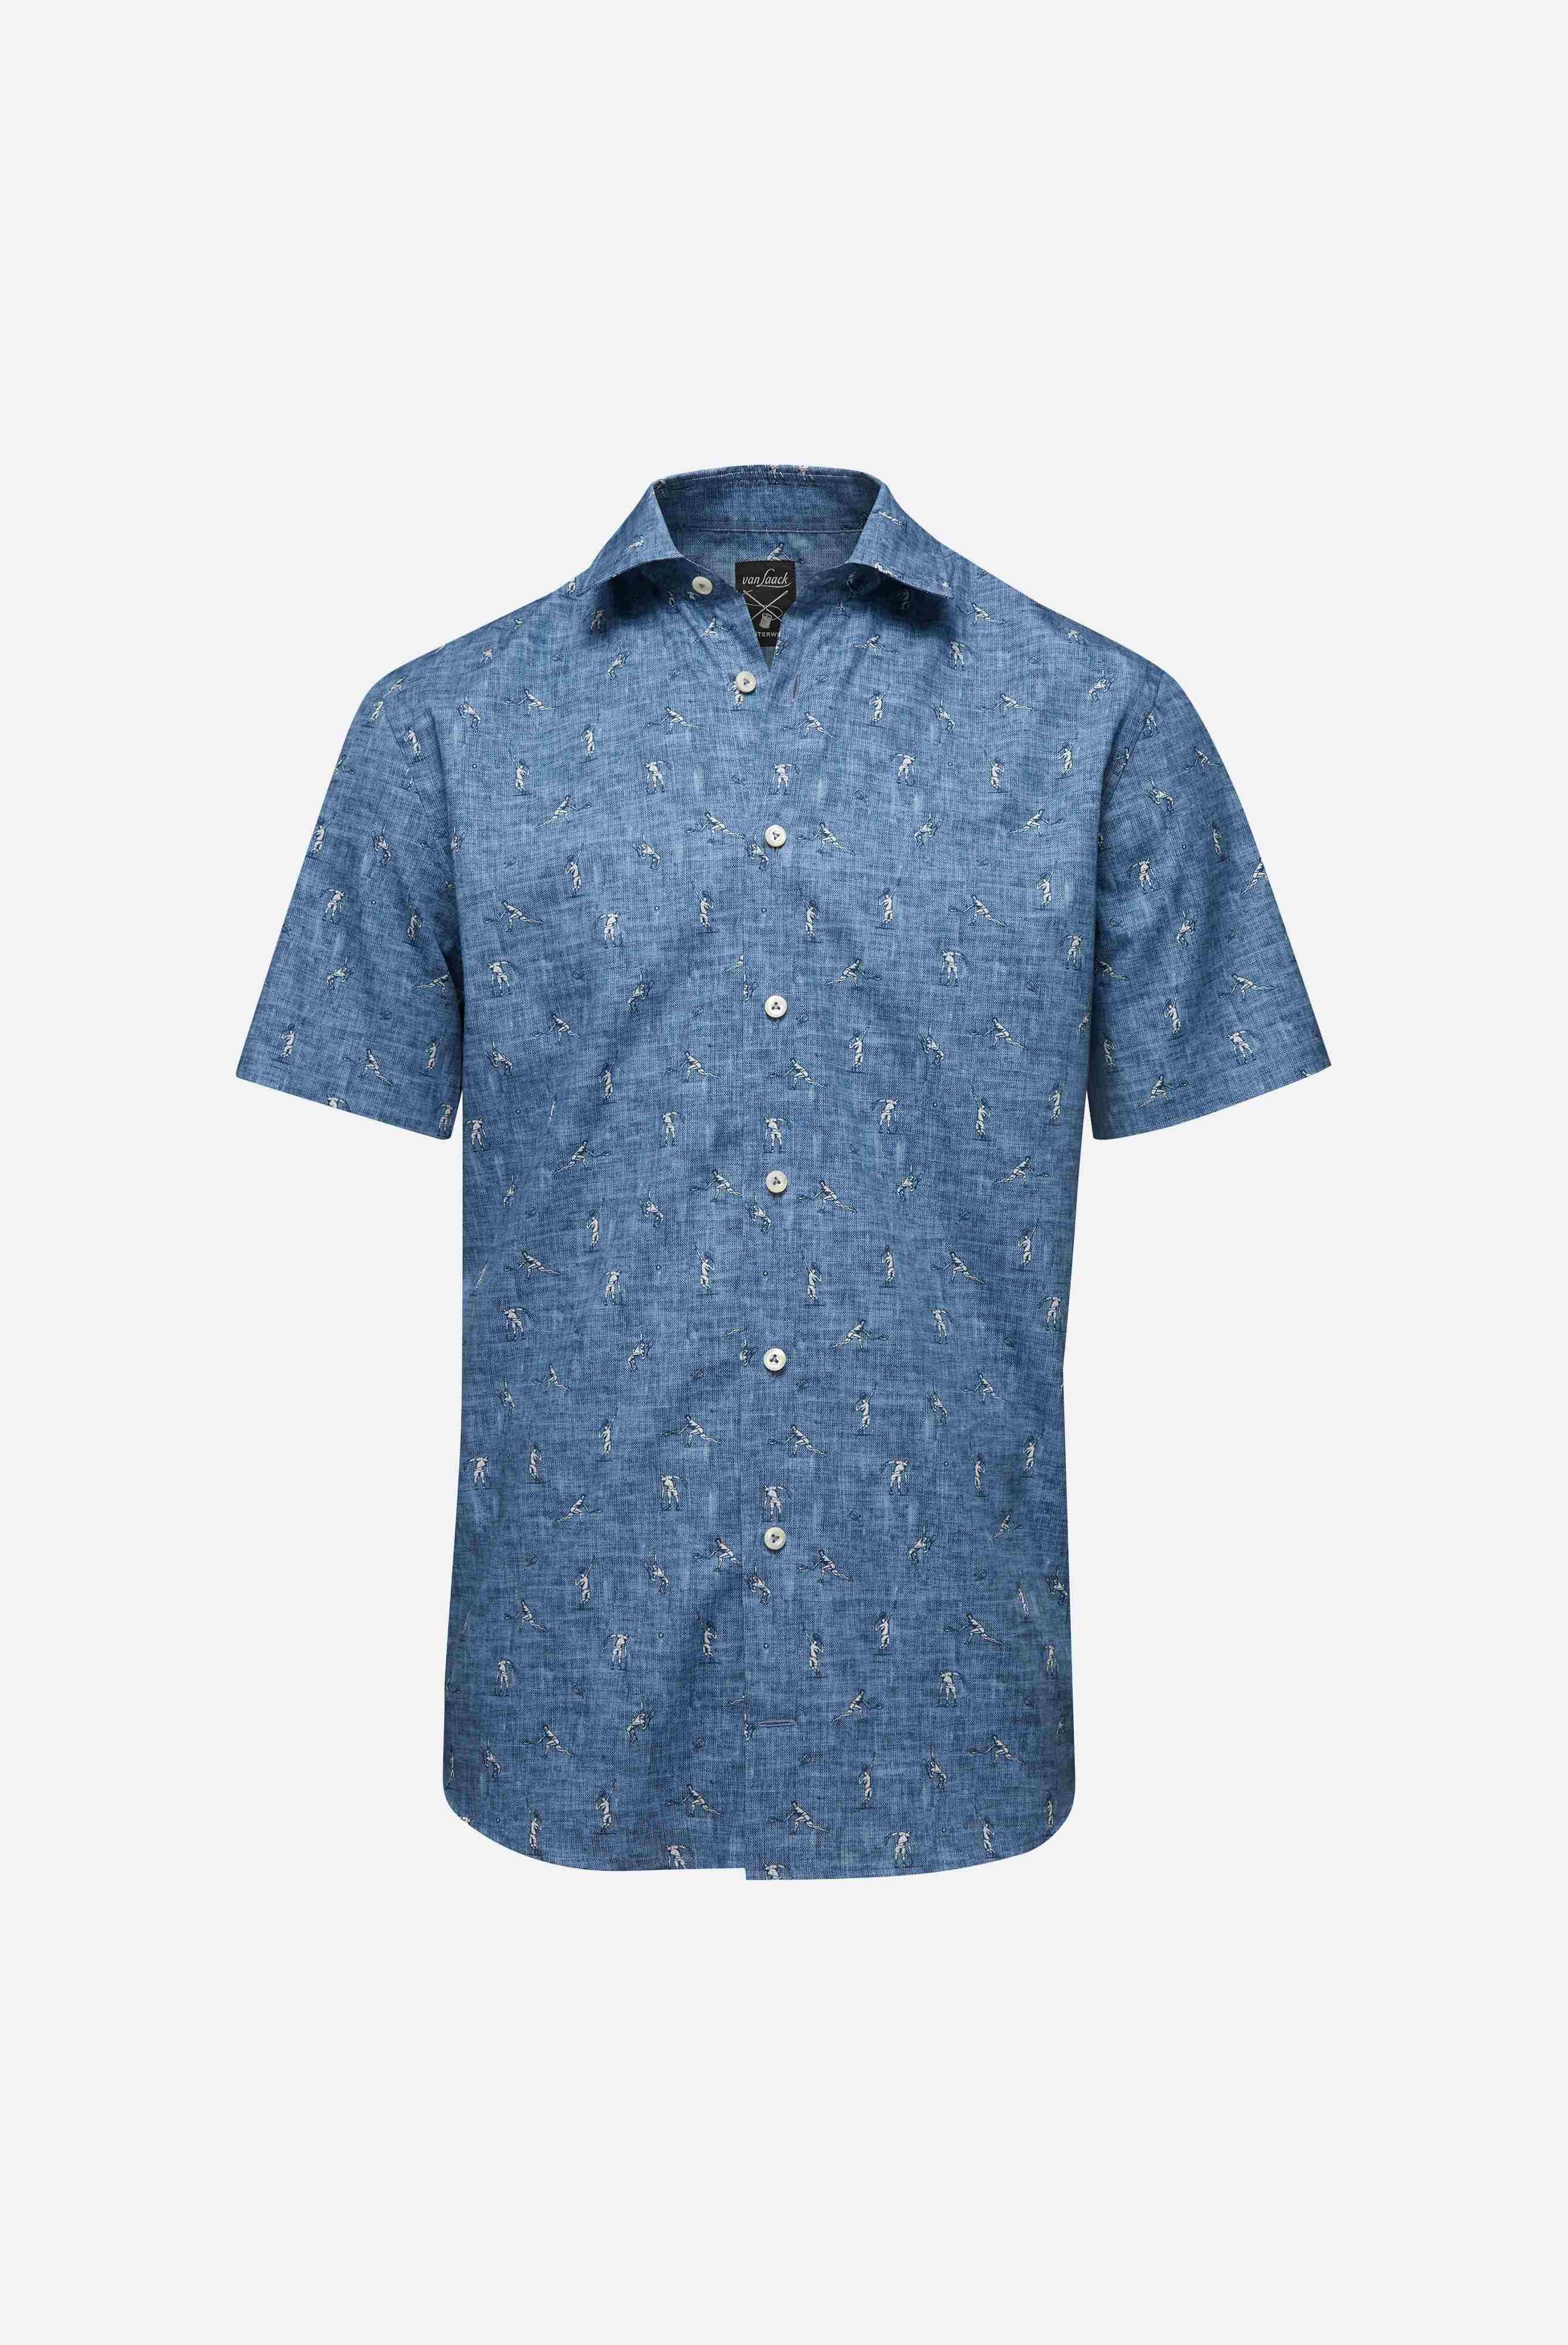 Short sleeve shirts+Cotton Denim Print Short Sleeve Shirt Tailor Fit+20.2052.RD.170362.760.38